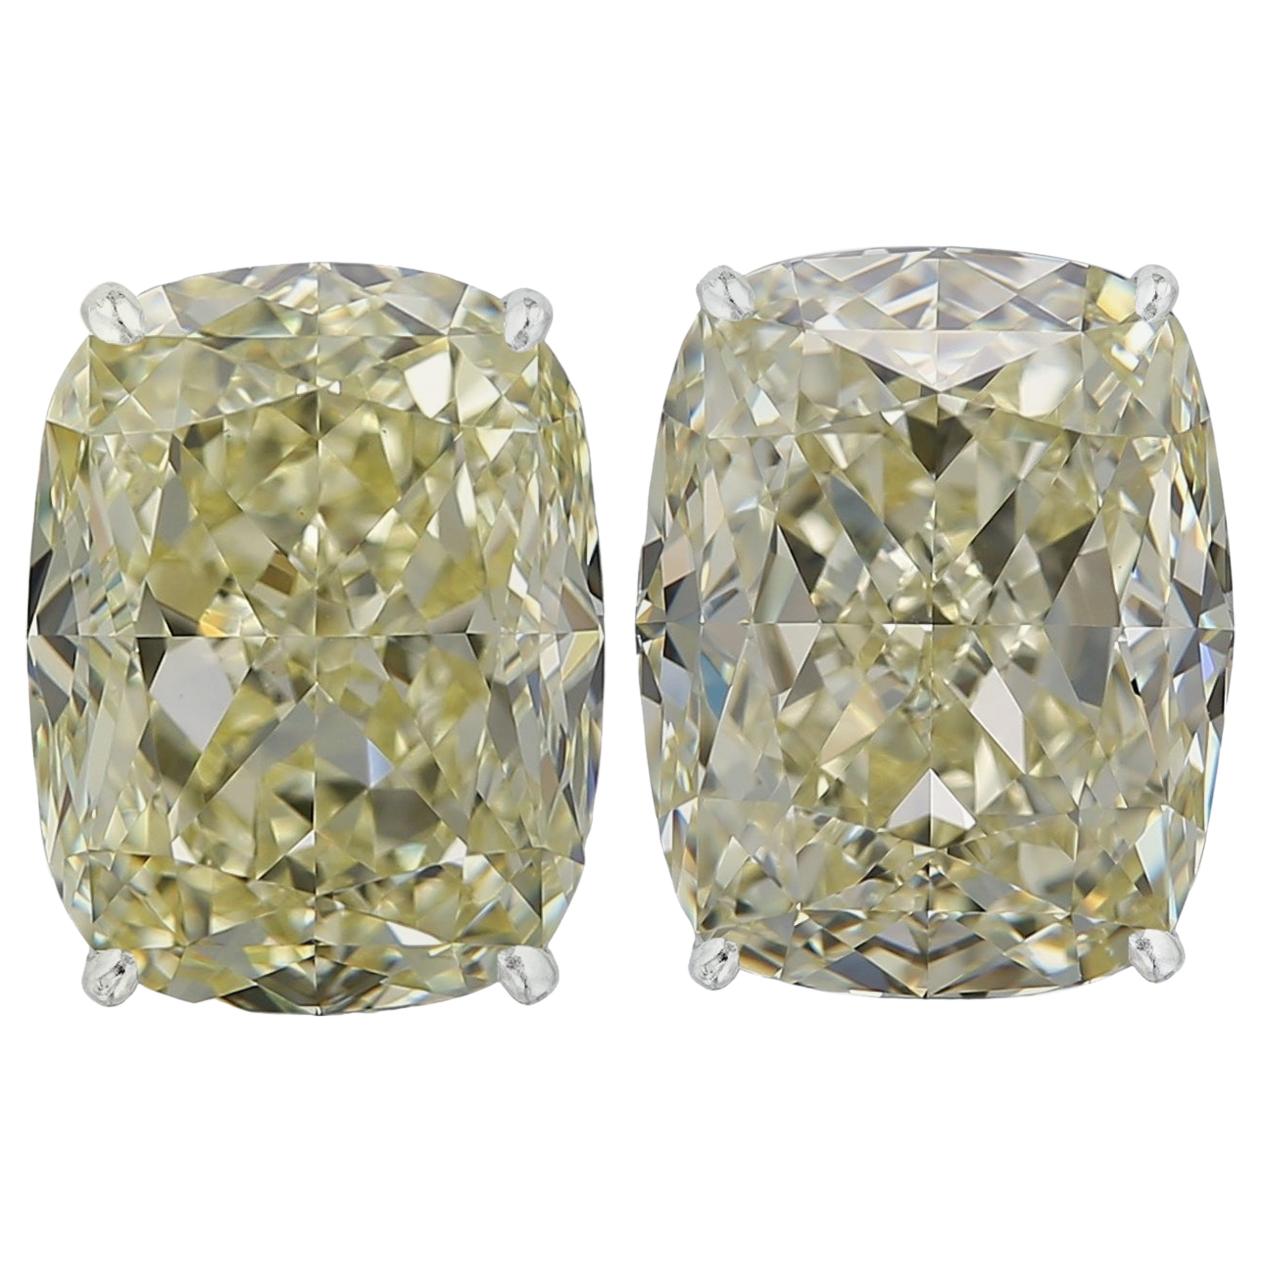 Internally Flawless/VS2 GIA Certified Fancy Light Yellow Diamond 10.04 Carat